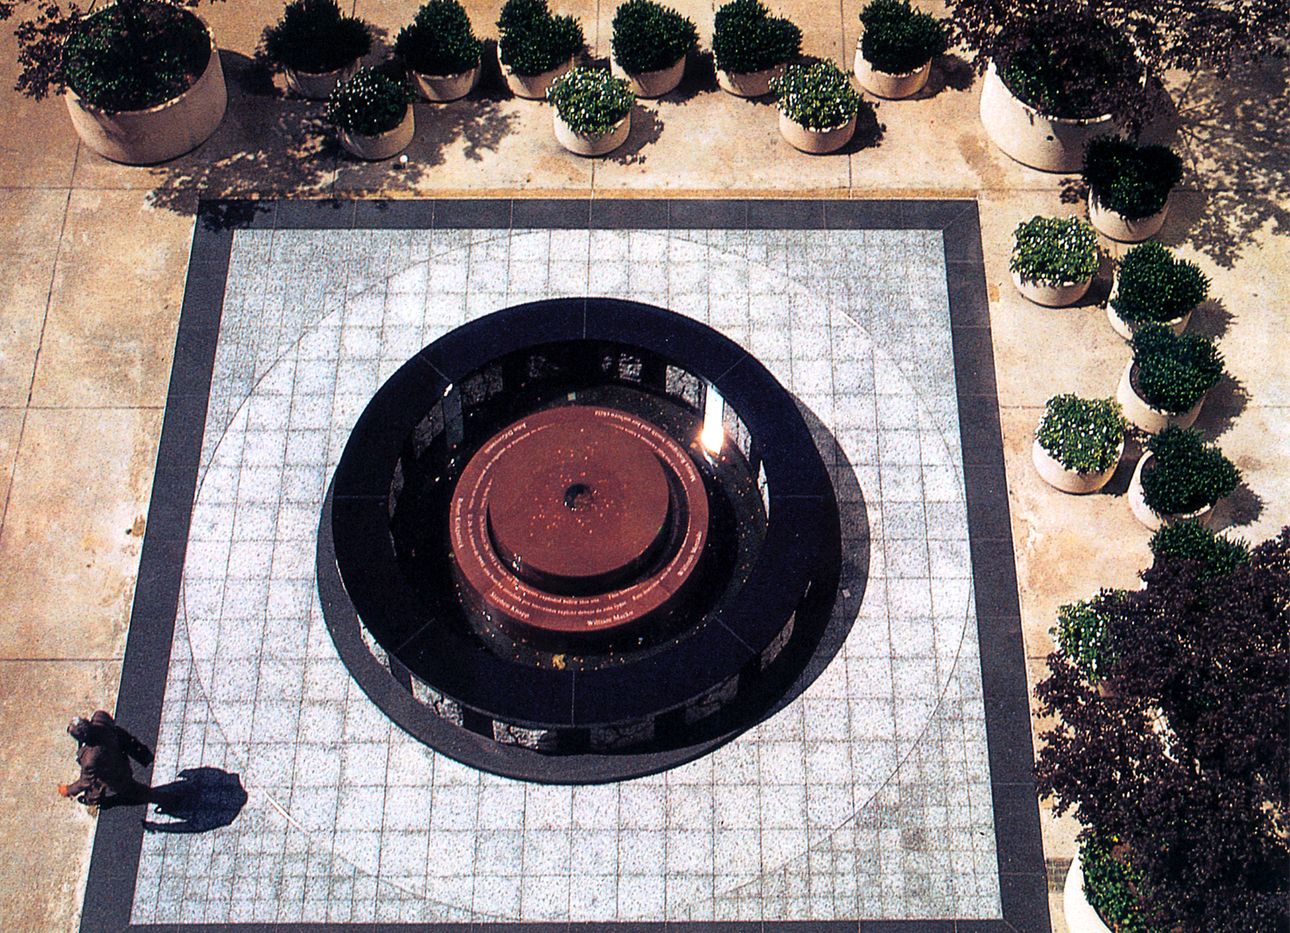 Elyn Zimmerman's 1993 World Trade Center bombing memorial